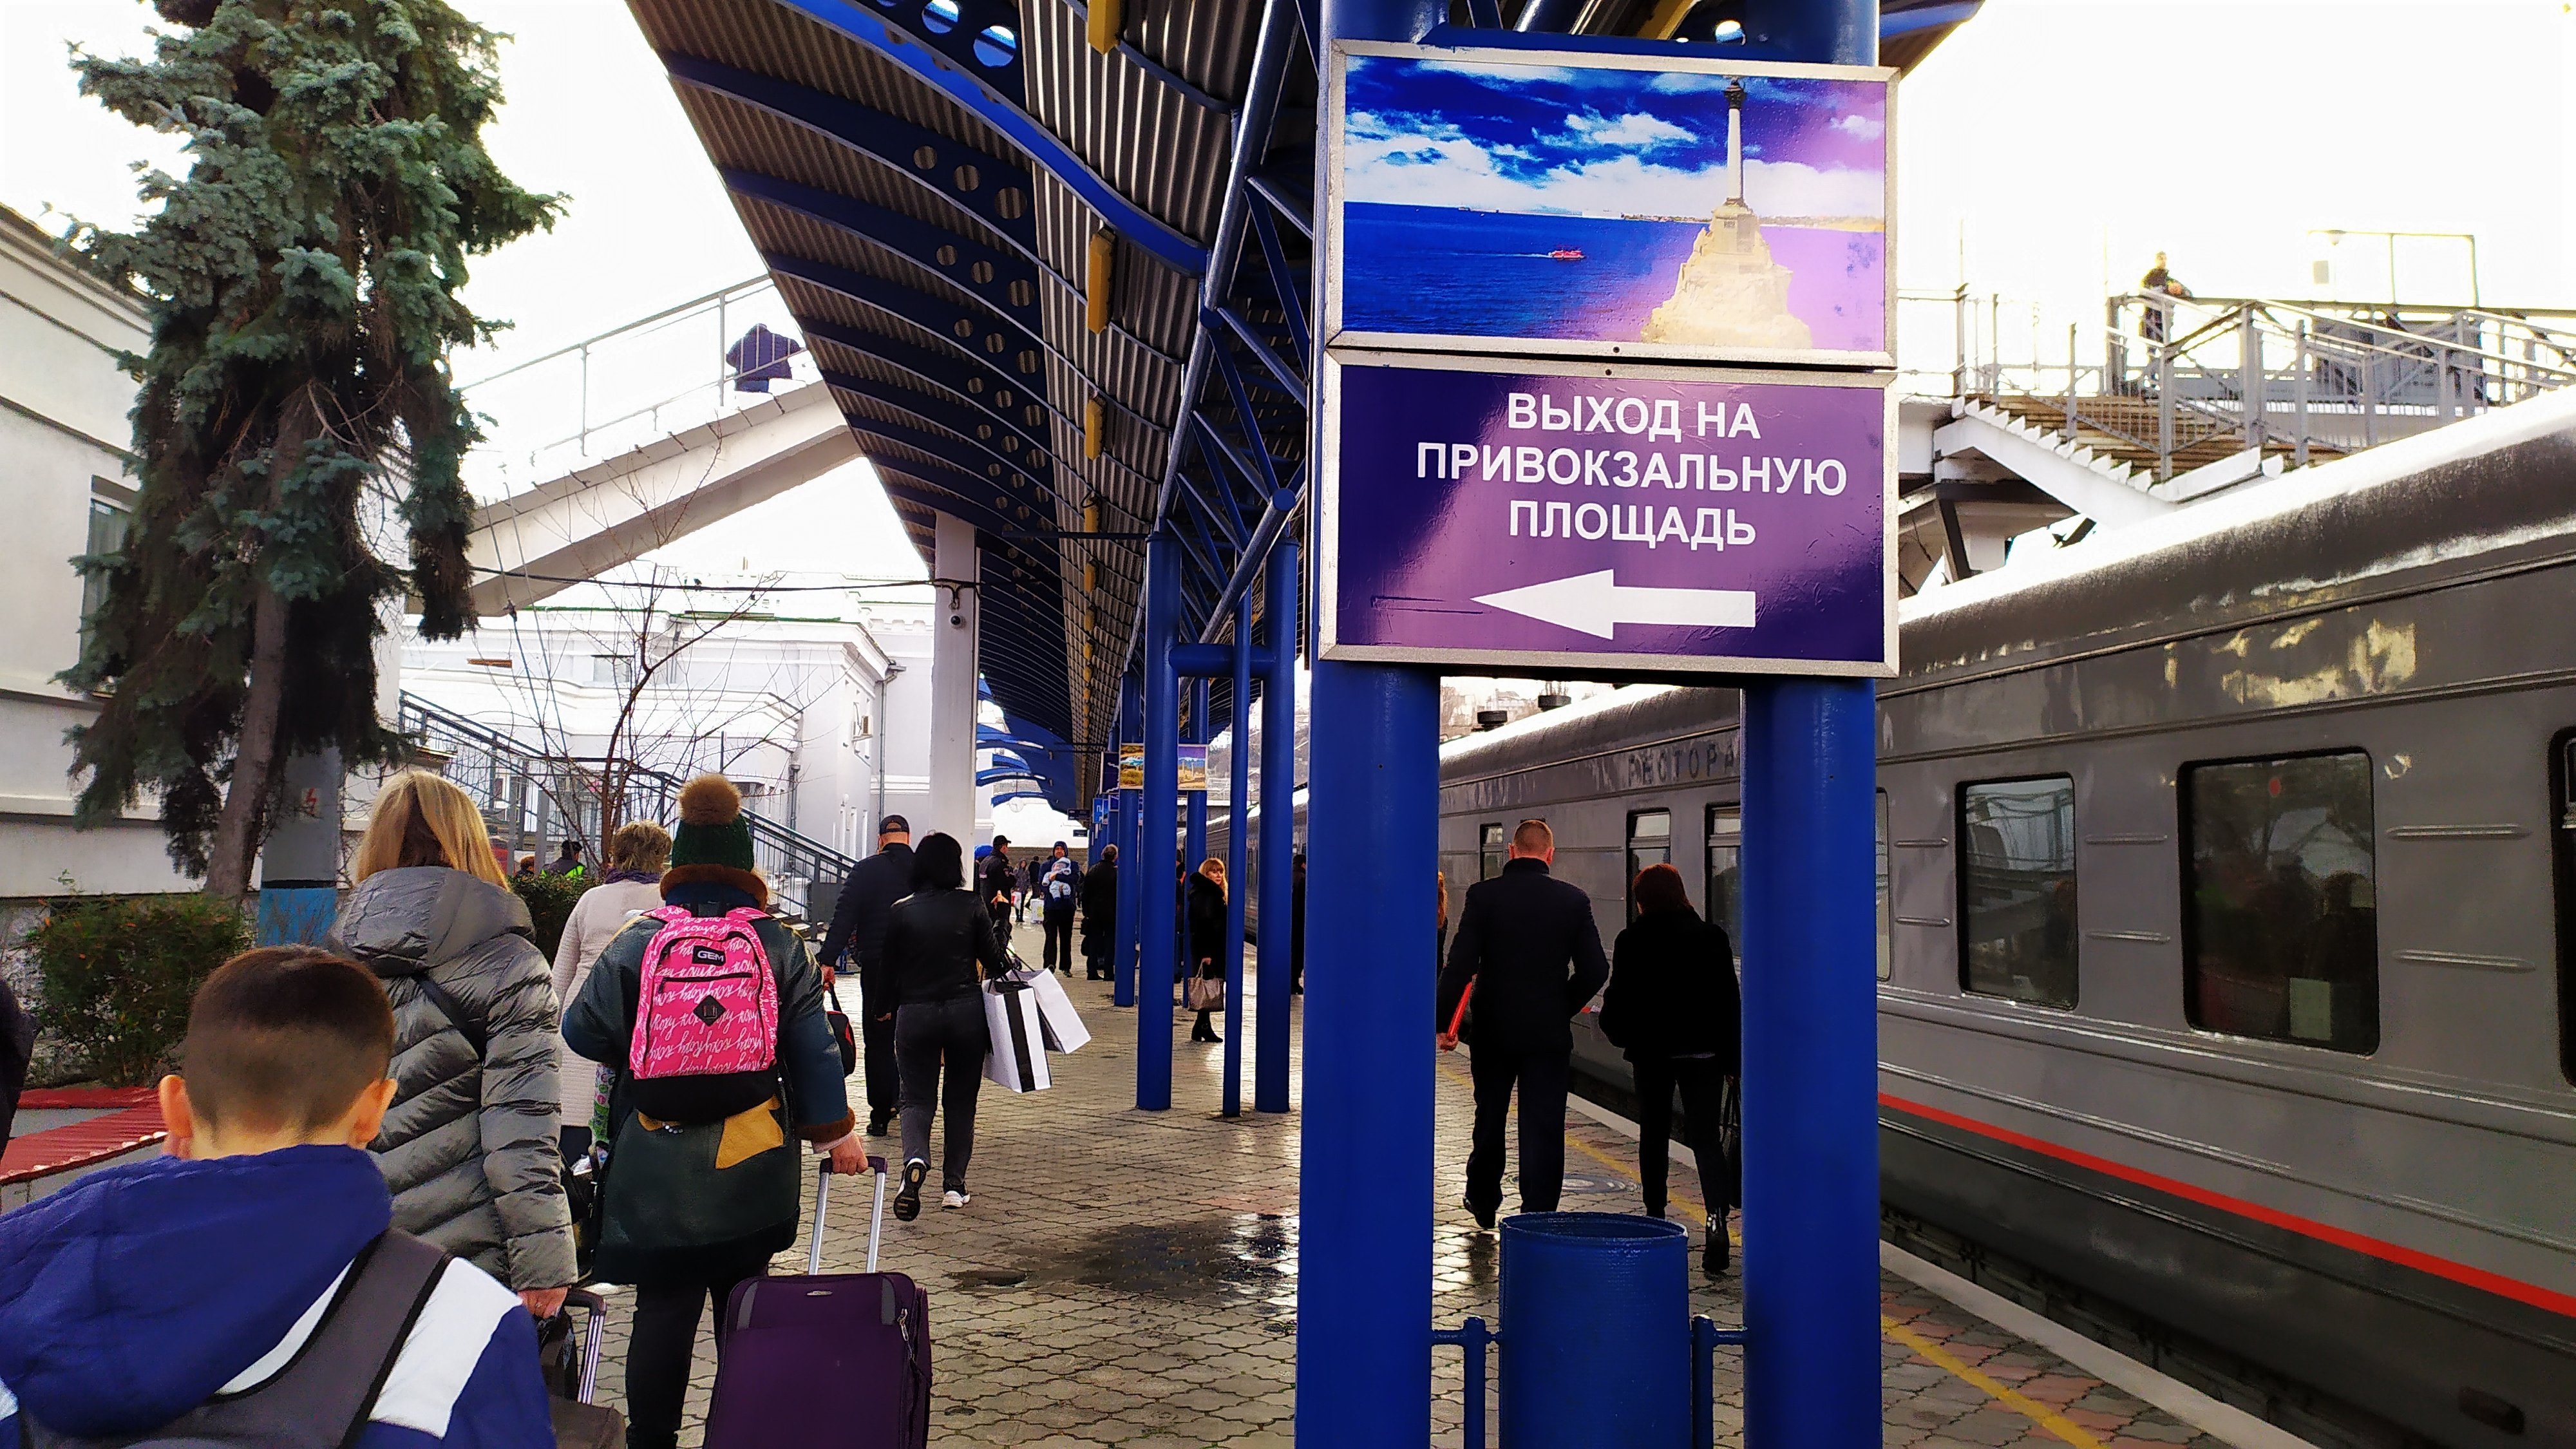 Information plates at the station of Sevastopol